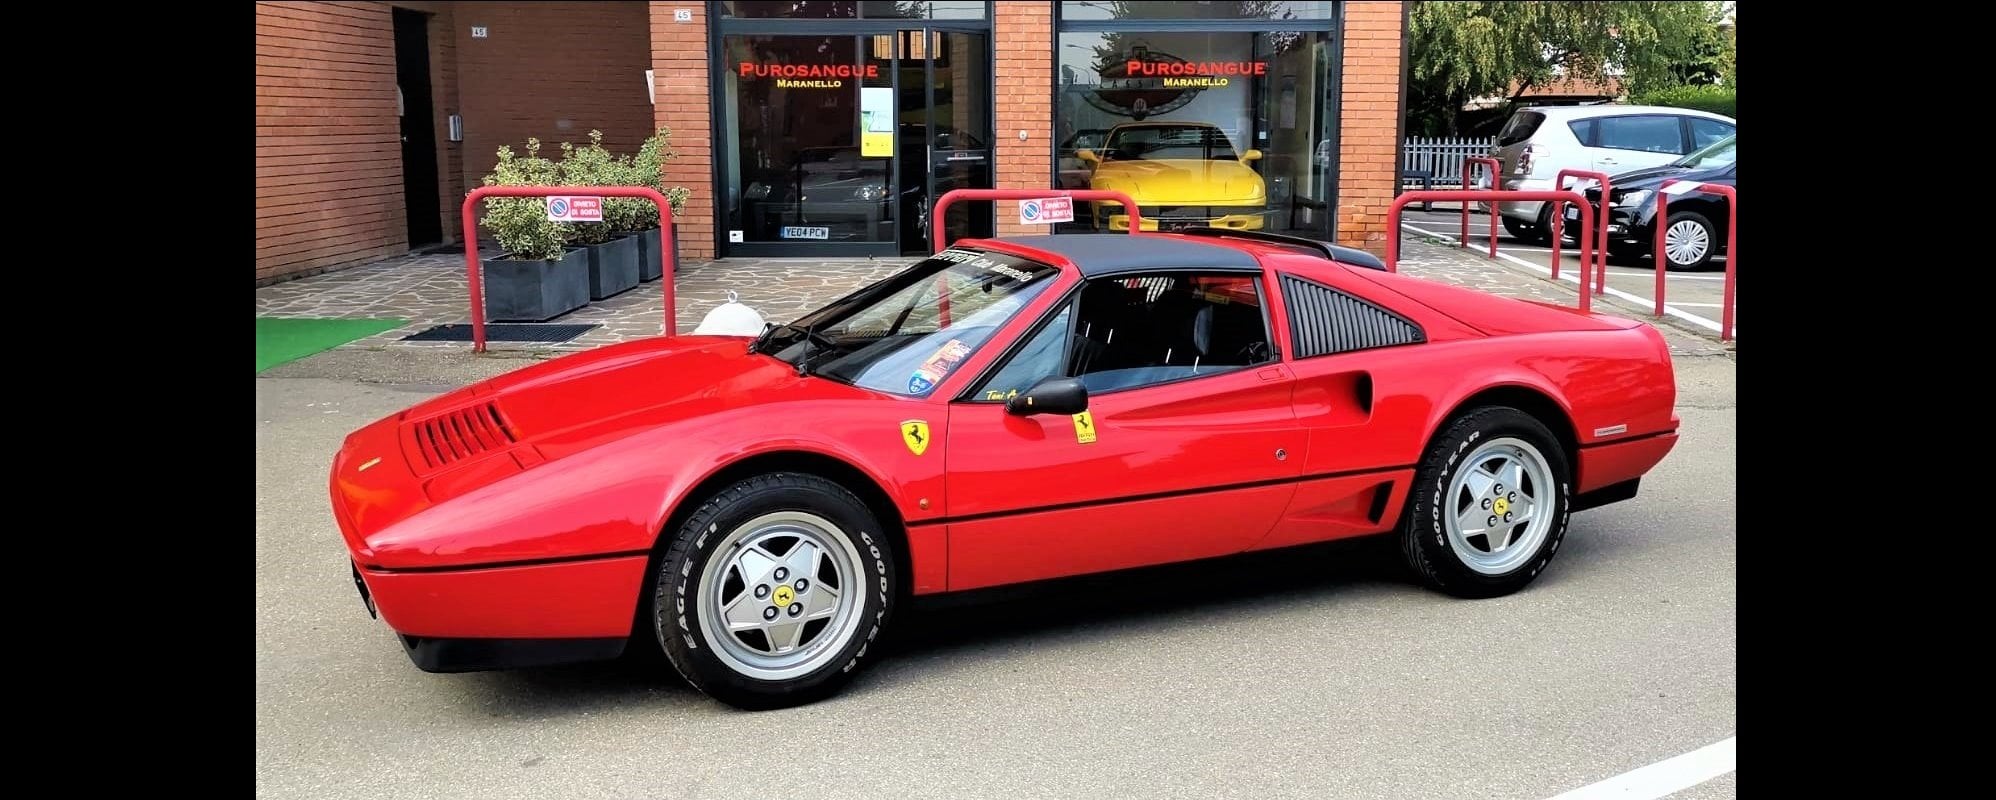 Purosangue Maranello showcase with a Ferrari 308 in front 